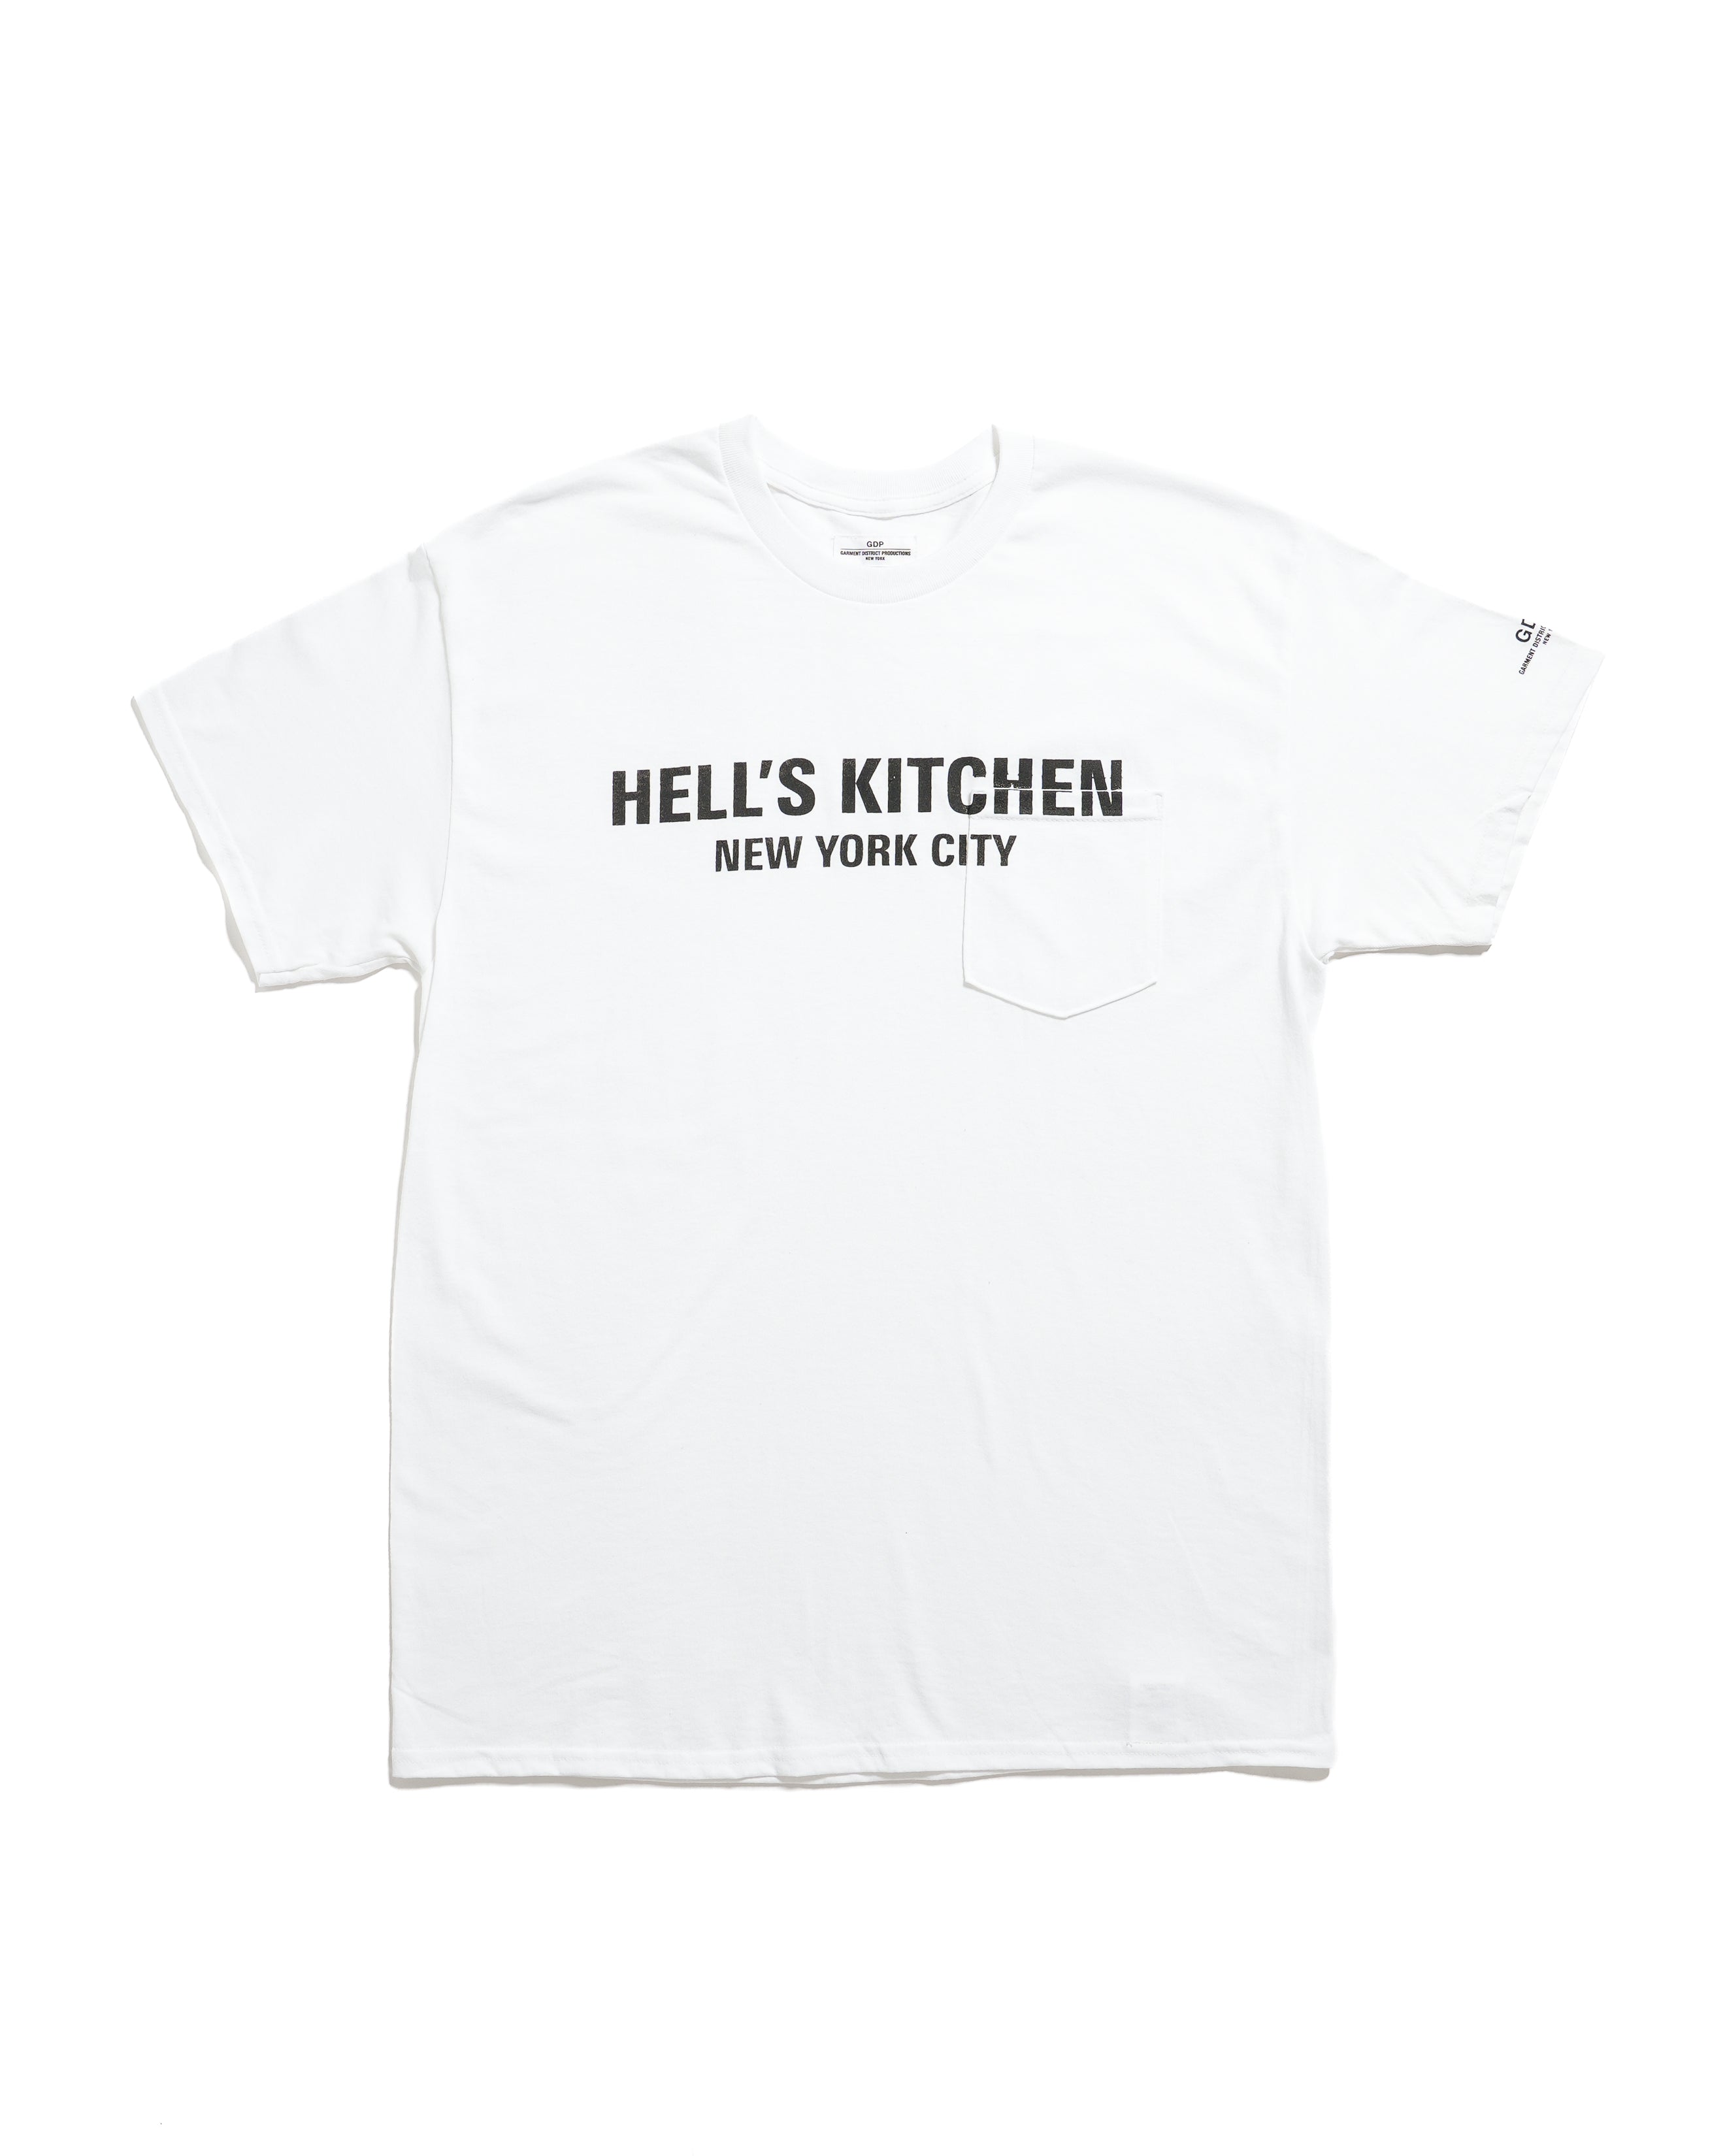 Hell's Kitchen Tee - White